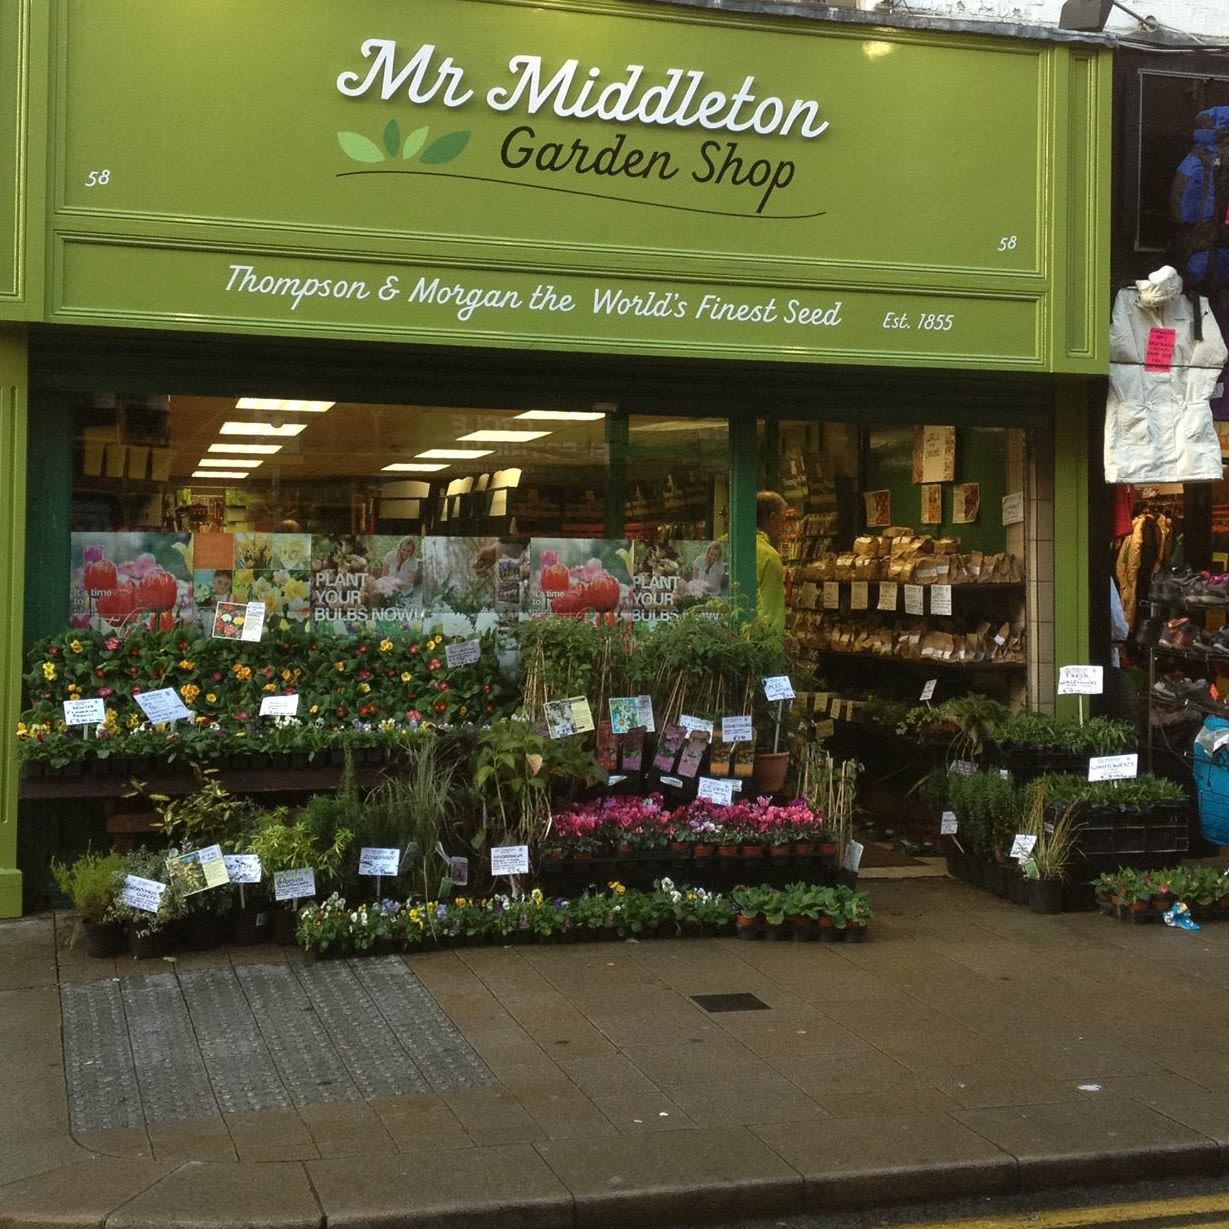 Mr Middleton Garden Shop